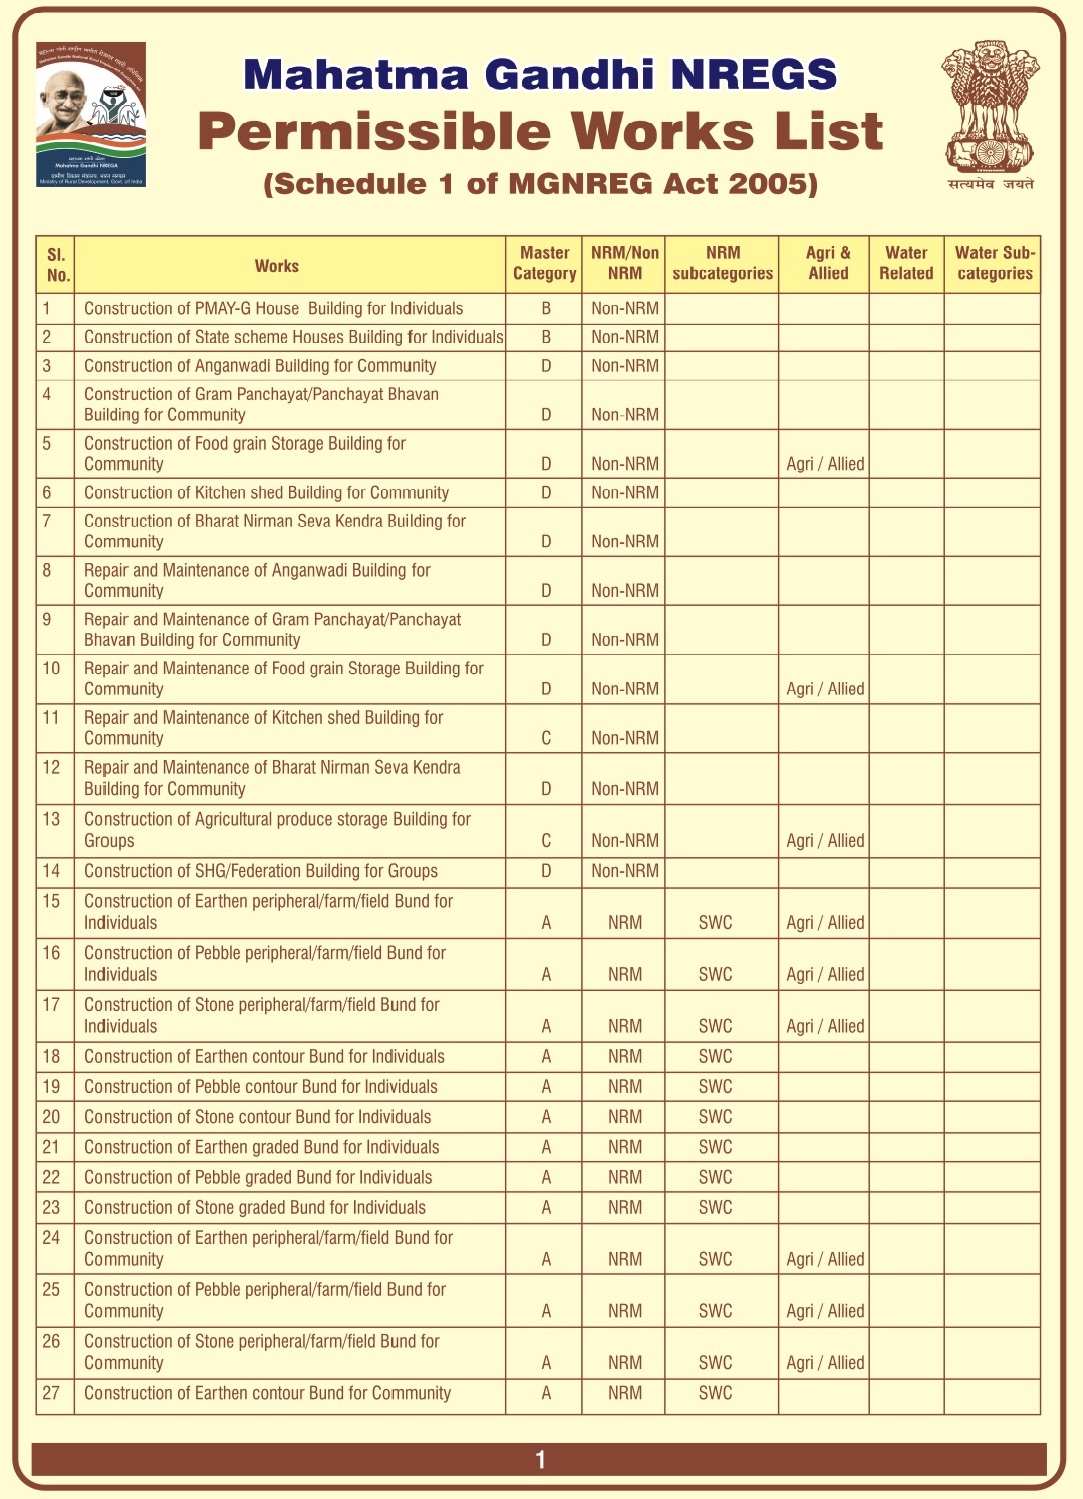 MGNREGA Permissible Works List